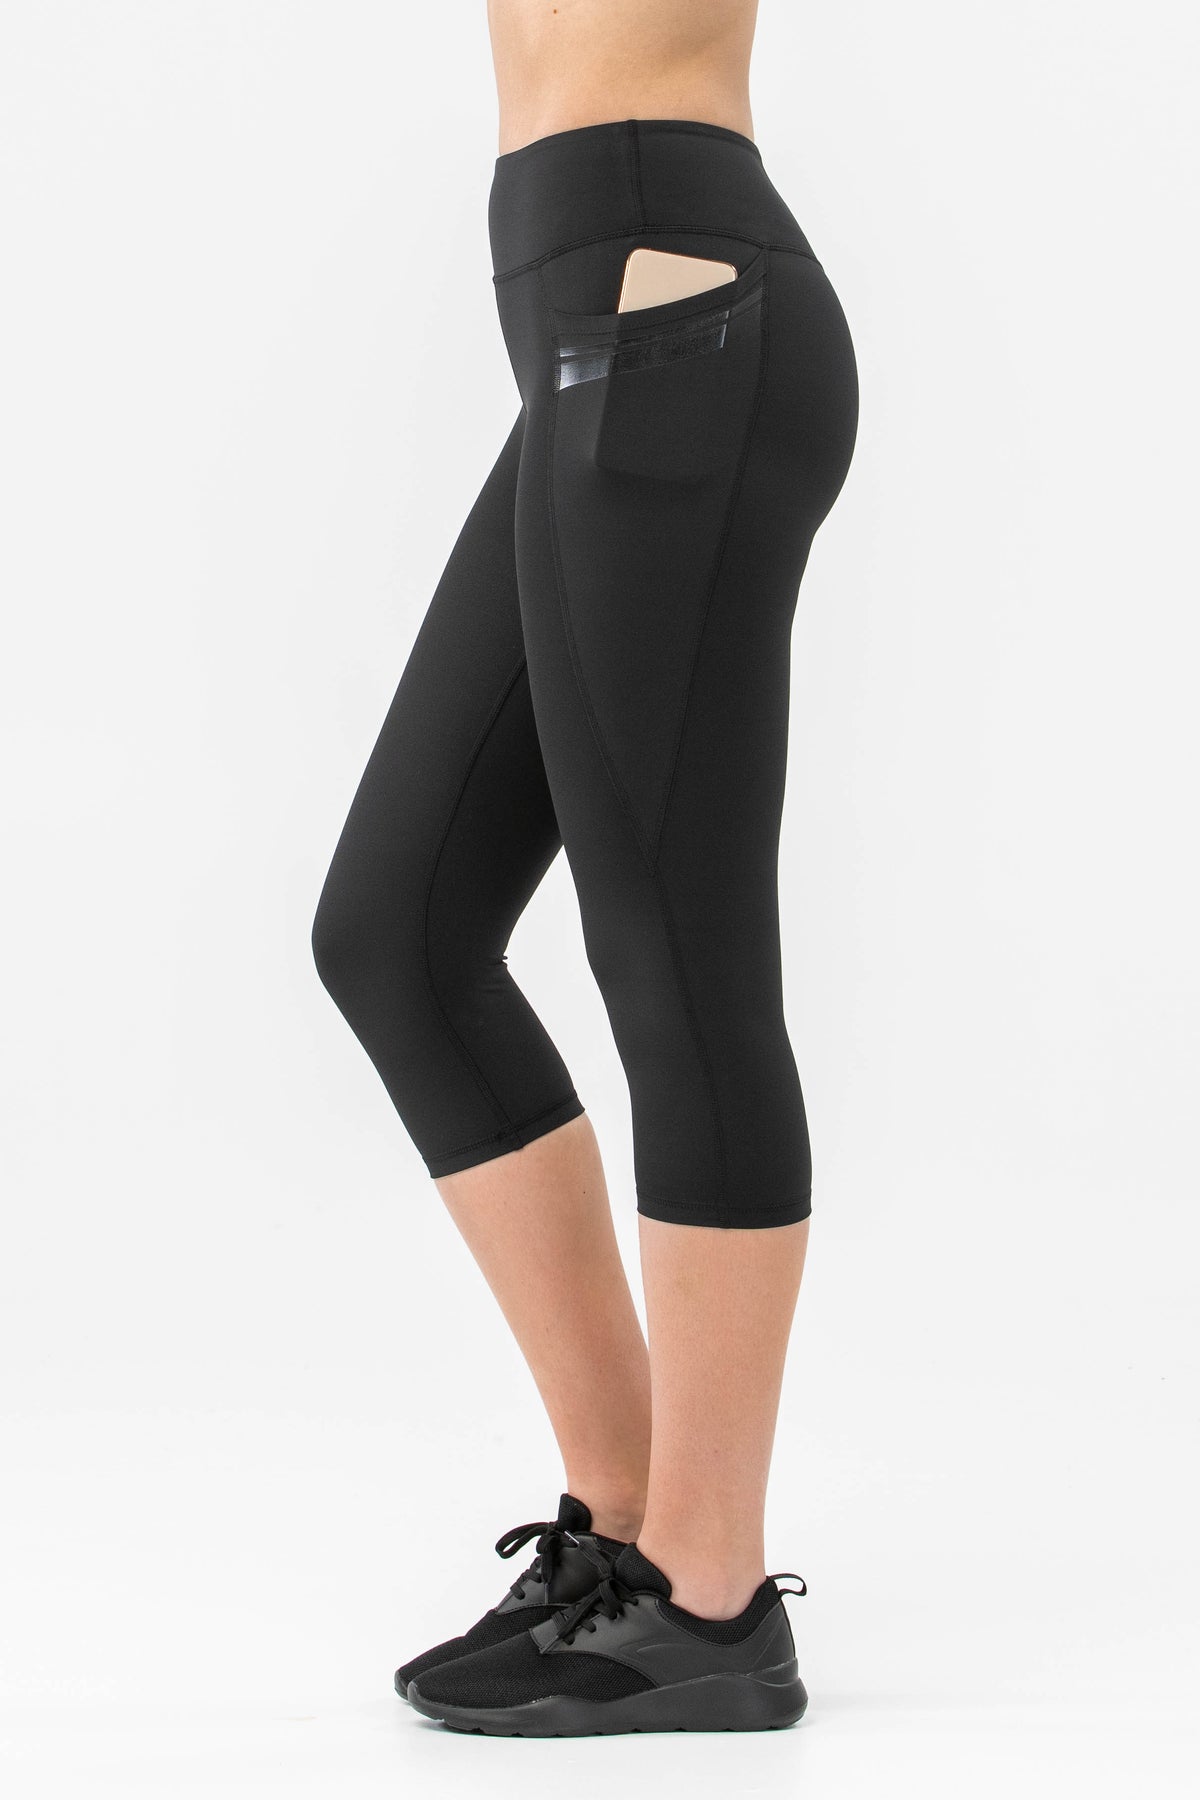 Tek Gear Dry Tek Womens XL Size Xtra Large Black Side Pockets 7/8 Legging